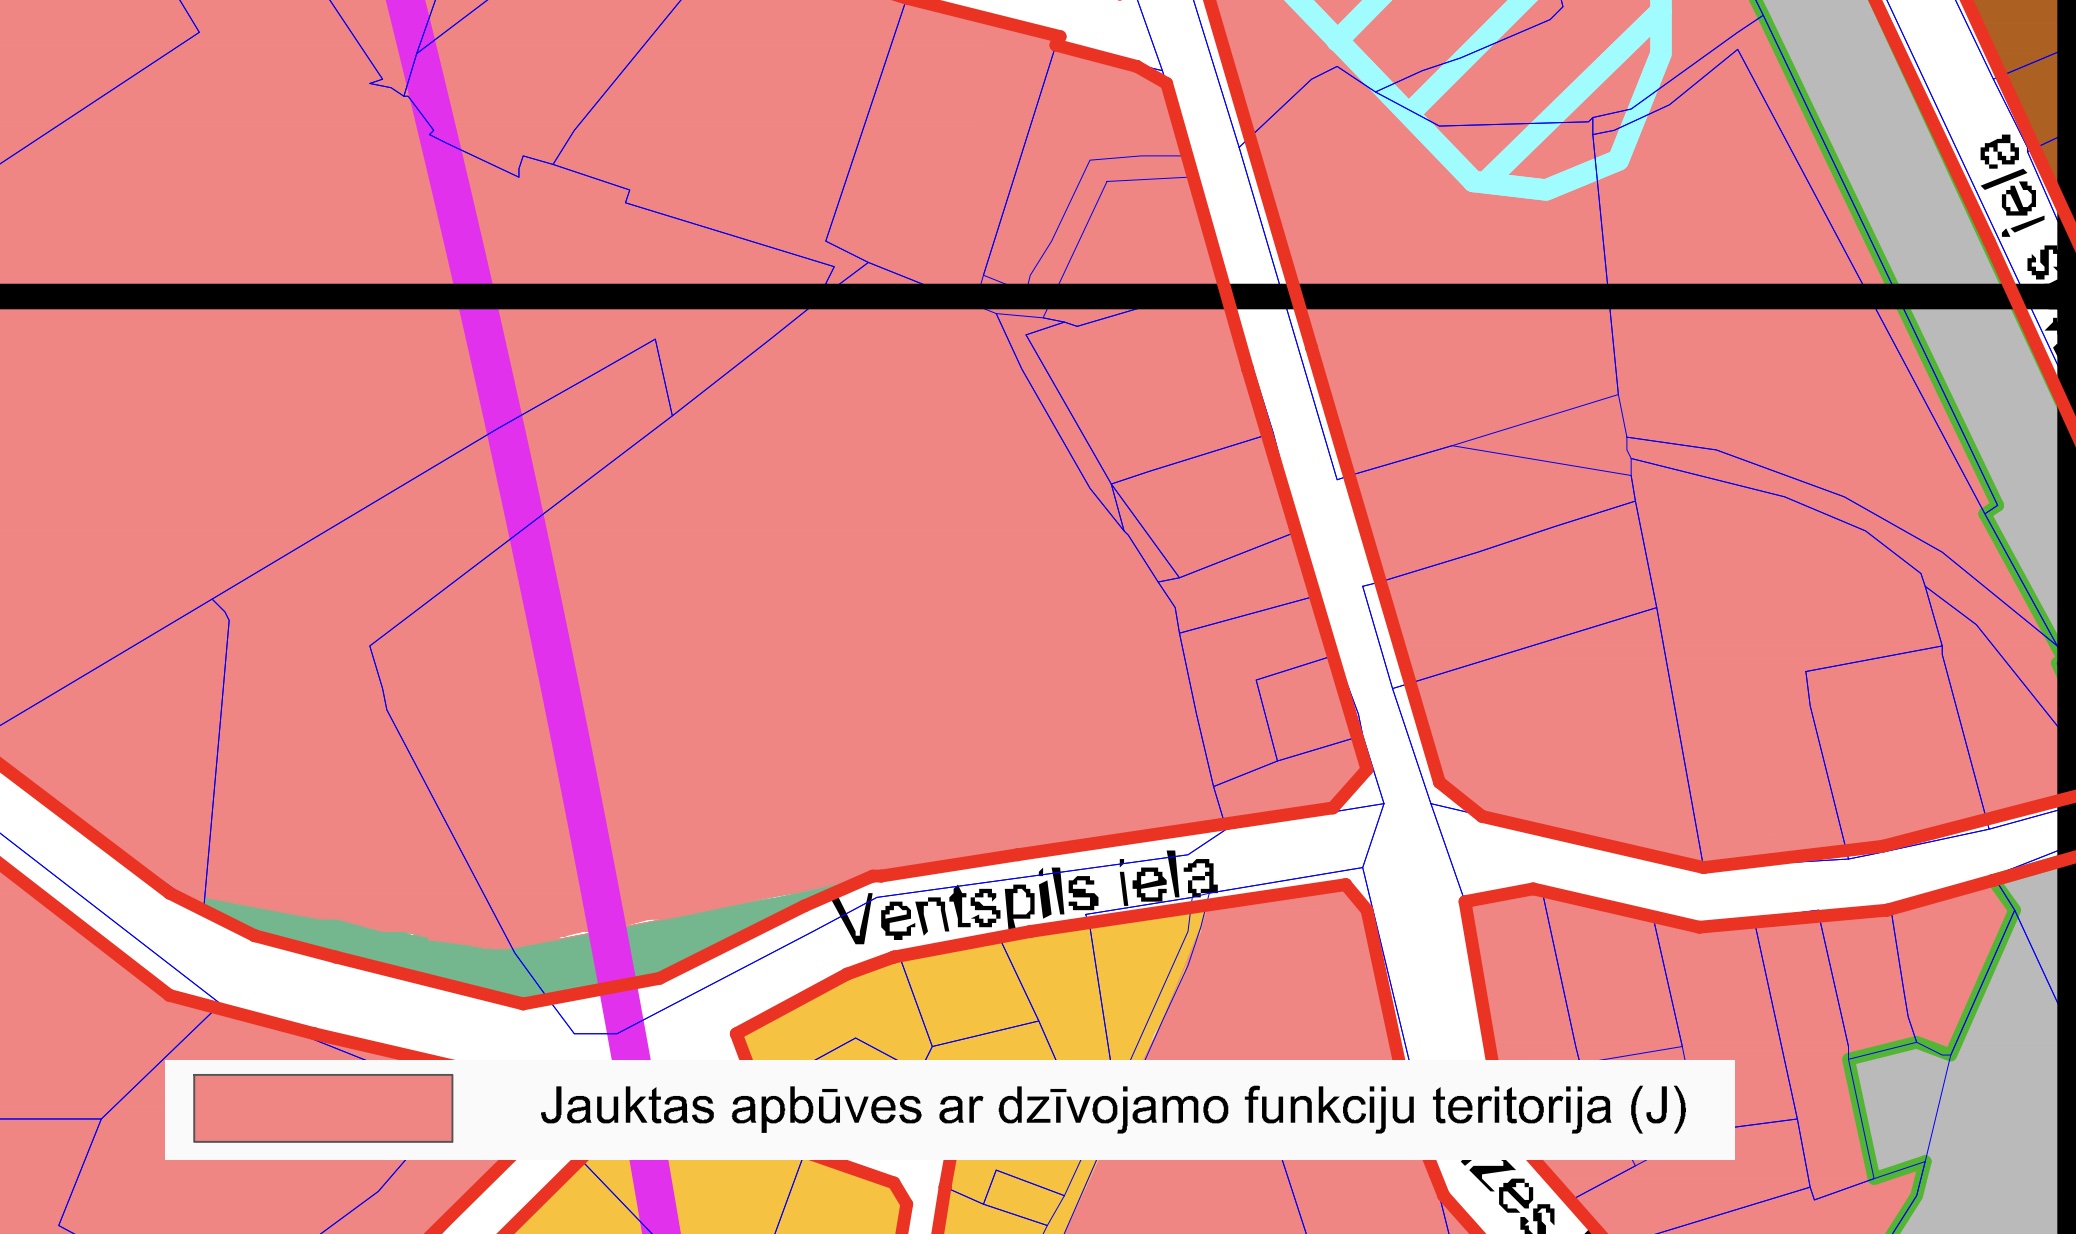 Investment property, Ventspils street - Image 1